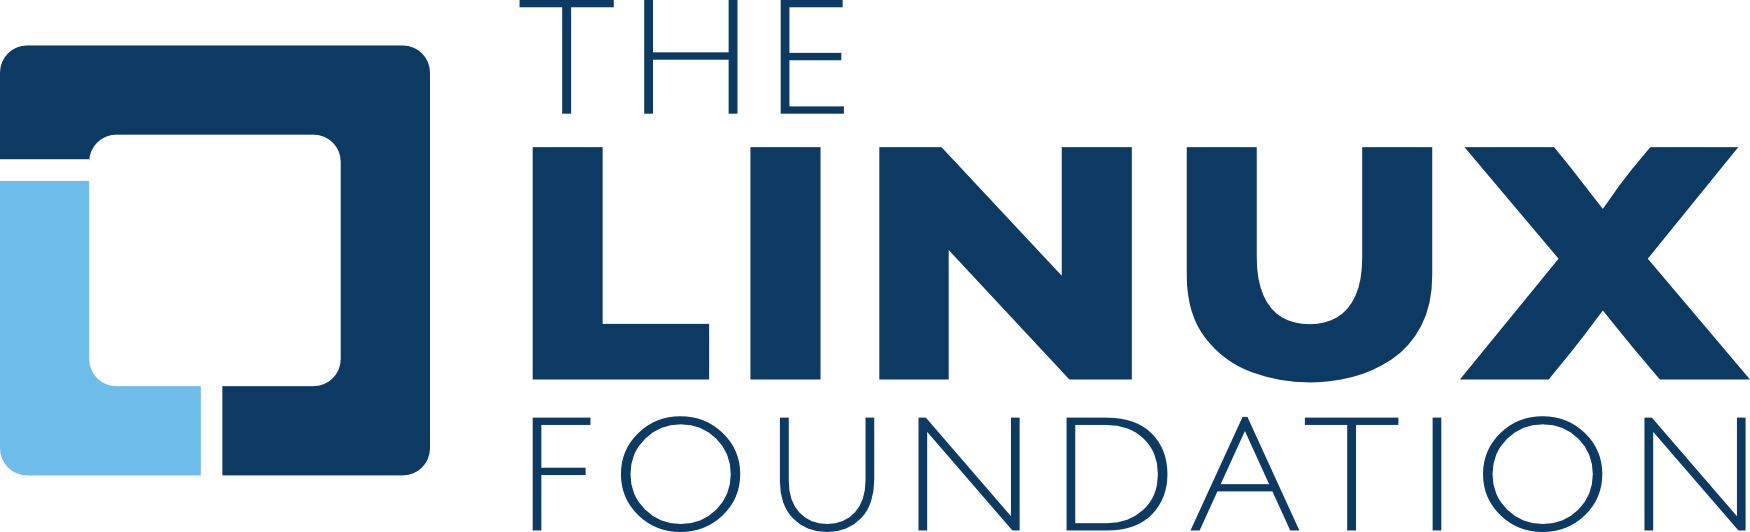 Original Linux Logo - Linux Foundation logo.png